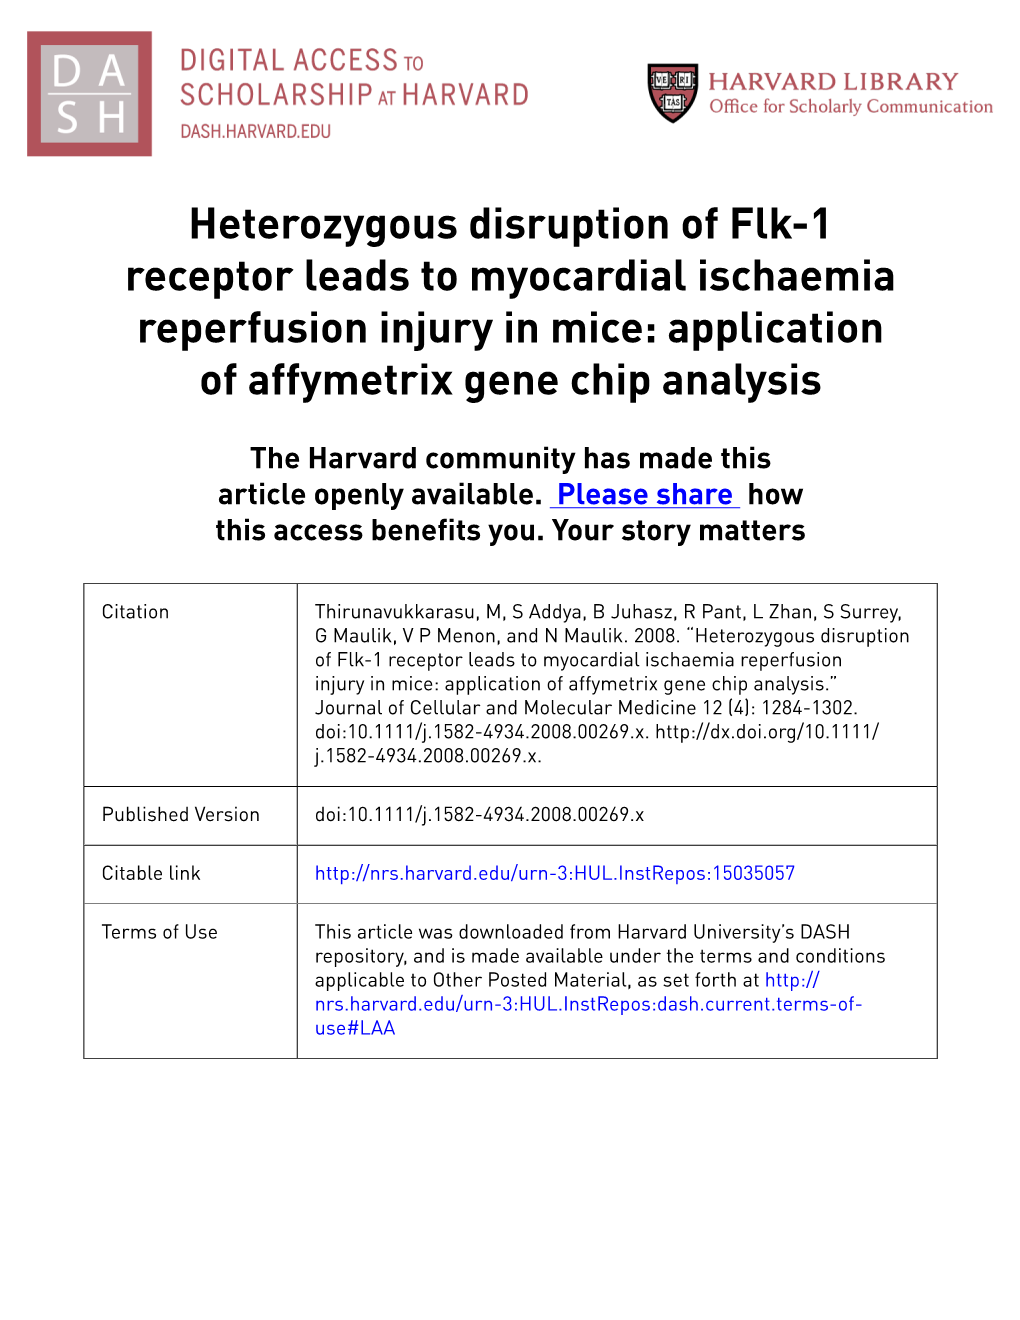 Heterozygous Disruption of Flk1 Receptor Leads To